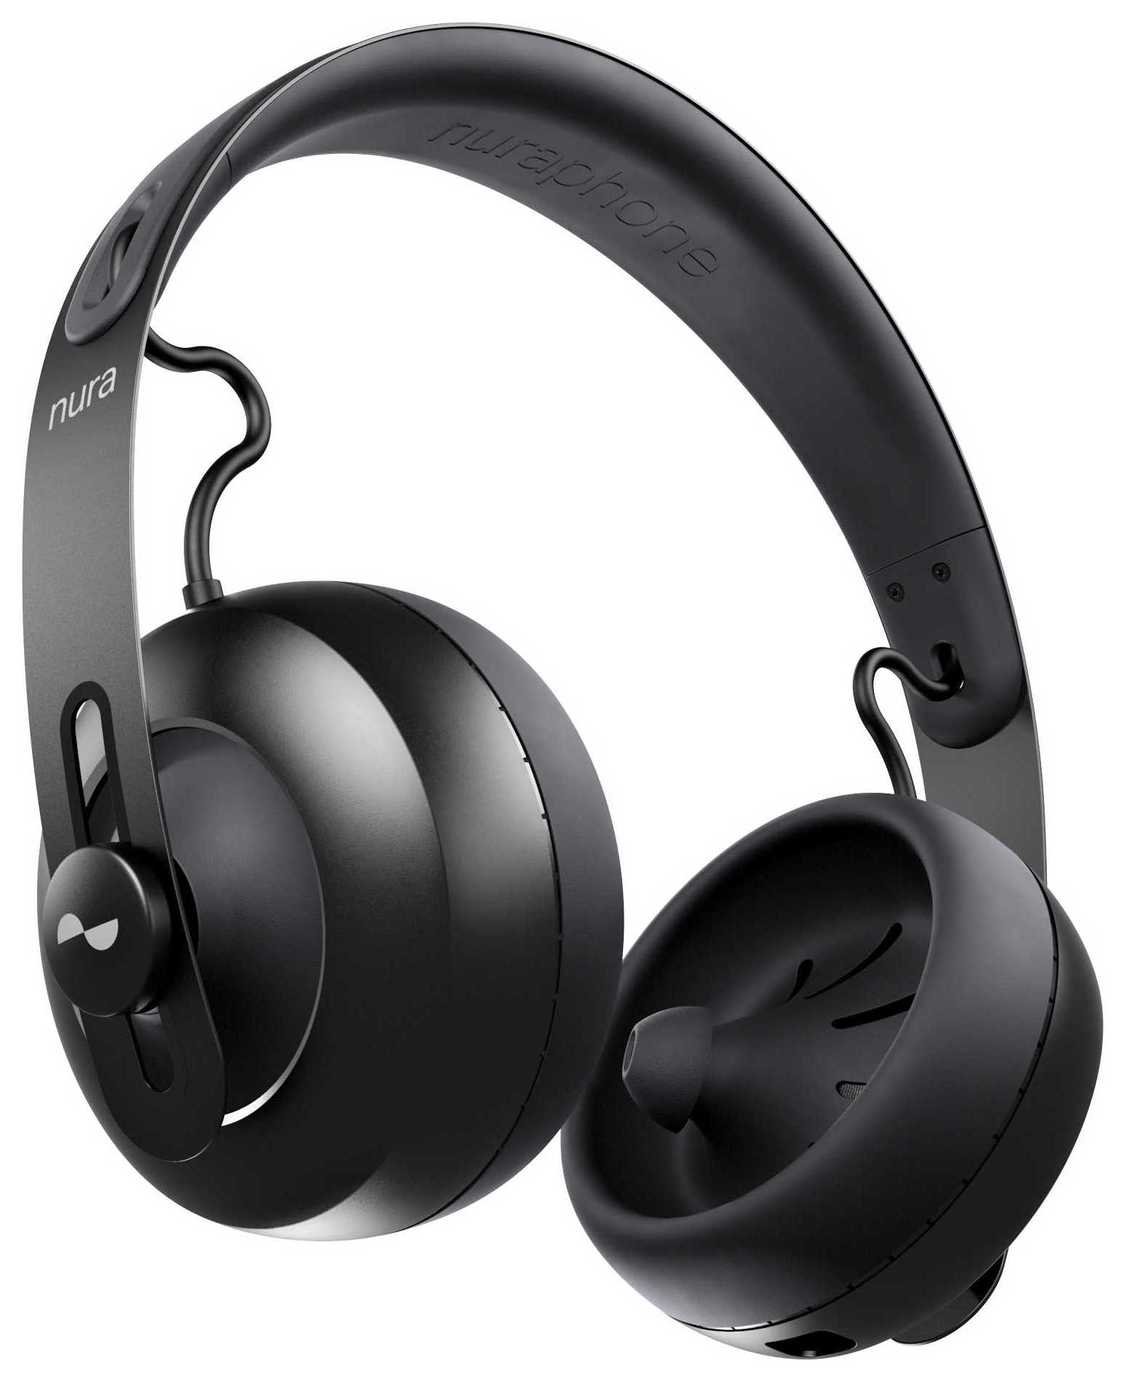 Nura Nuraphone Over-Ear Wireless Headphones - Black